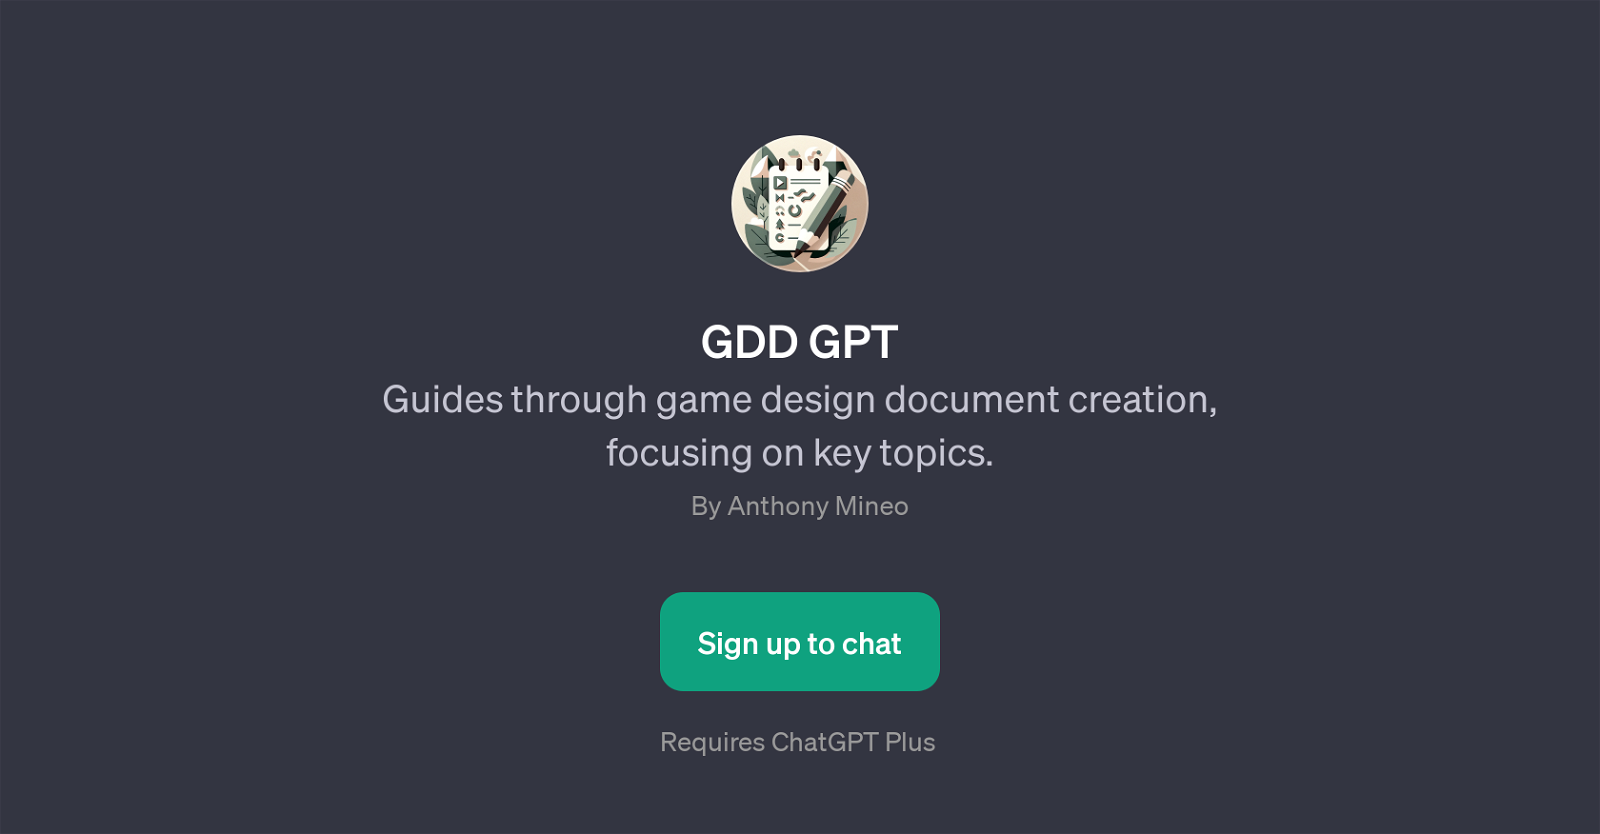 GDD GPT website